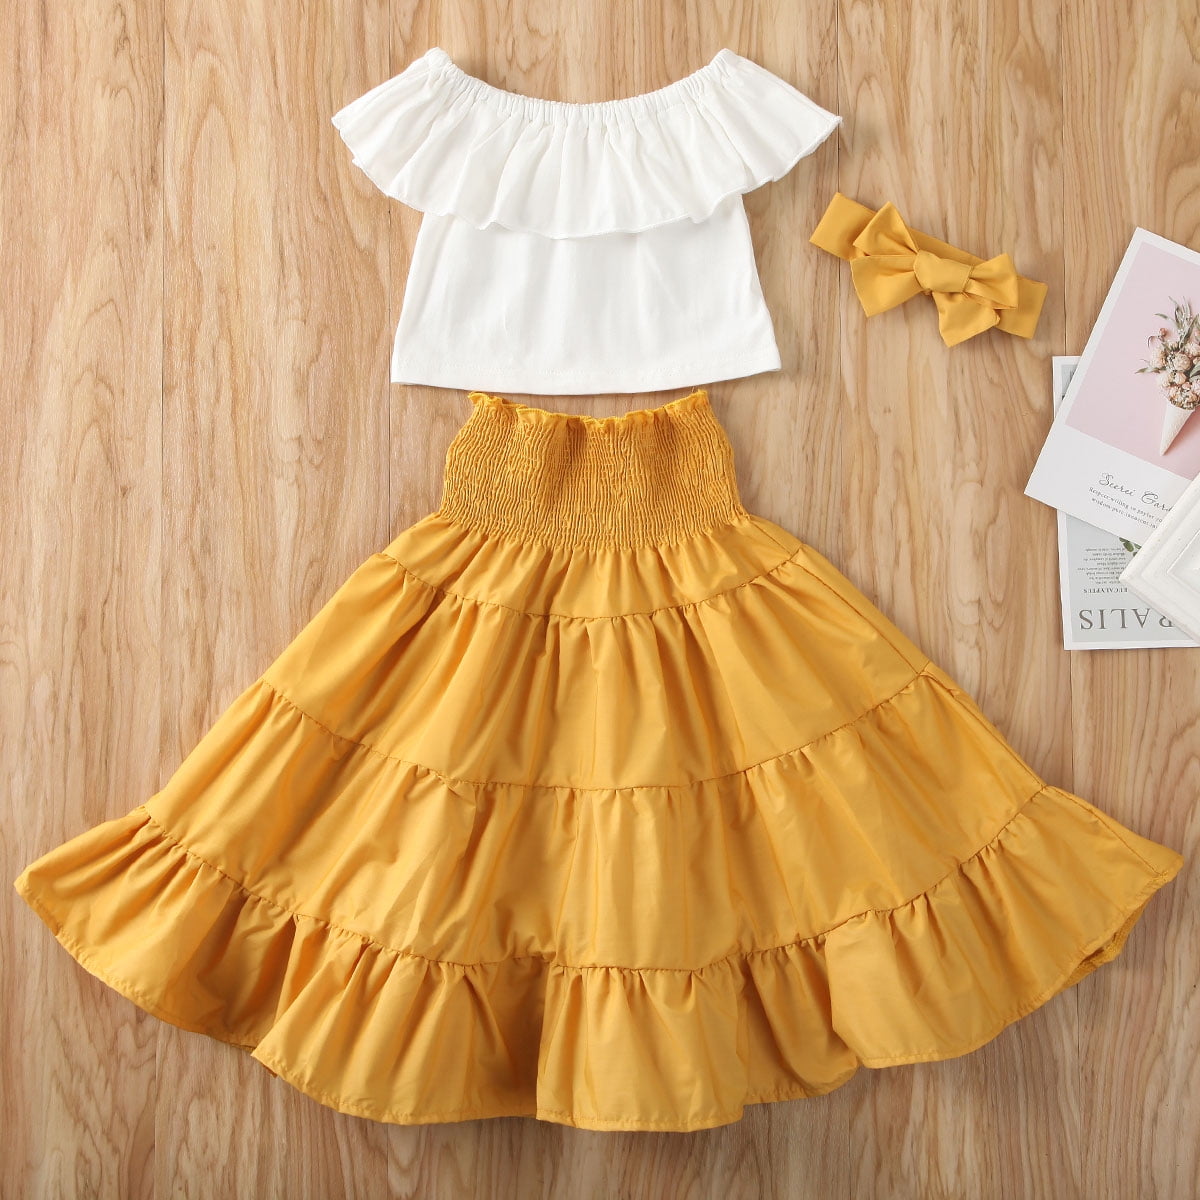 GOLDEN GIRL Little Girls Top And Skirt Dress 